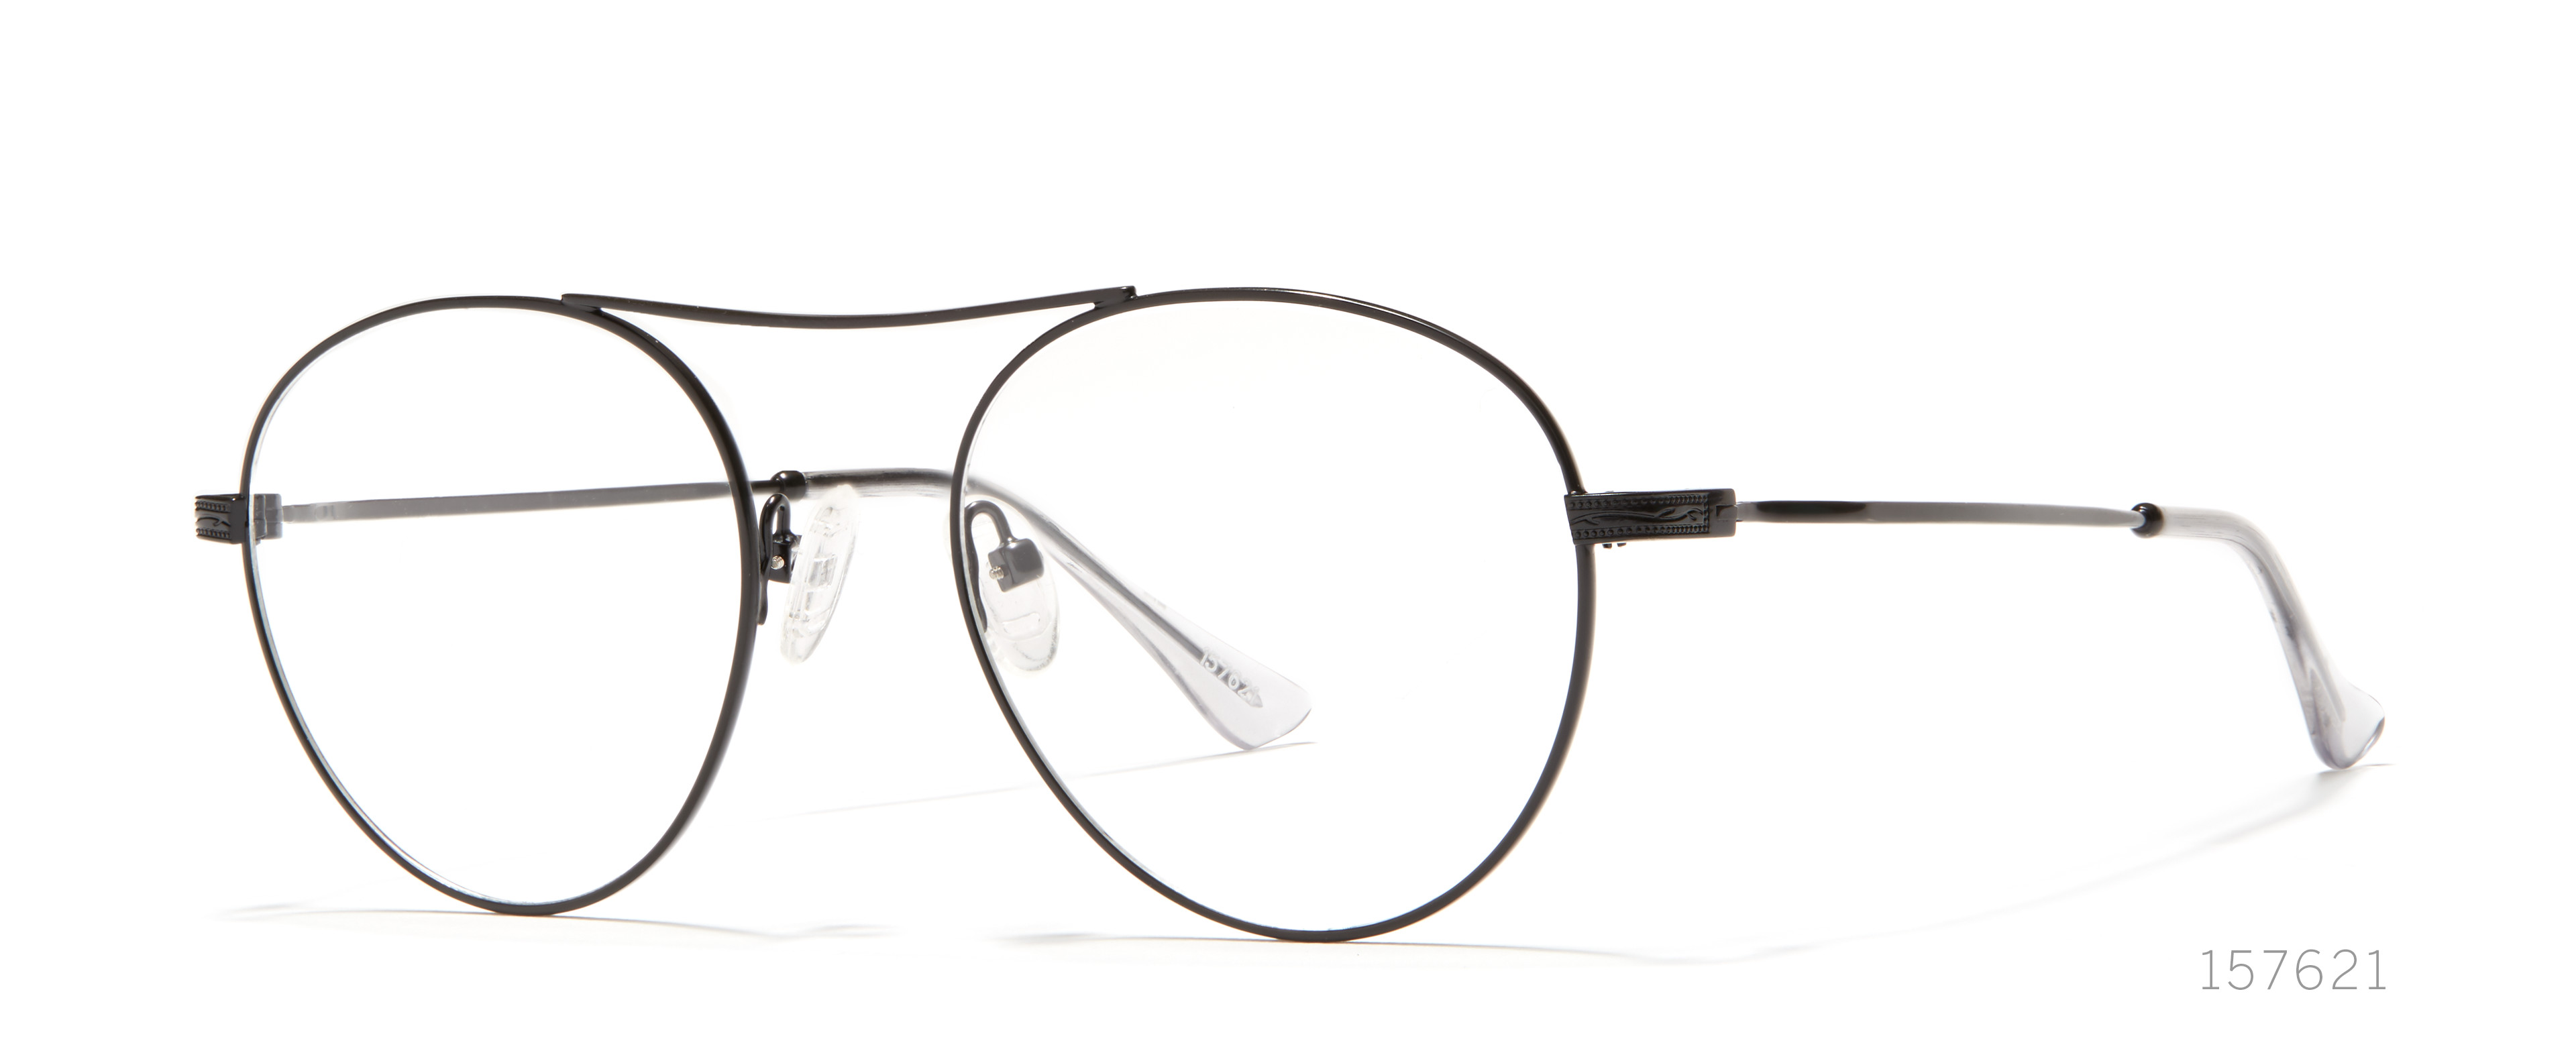 round wireframe glasses